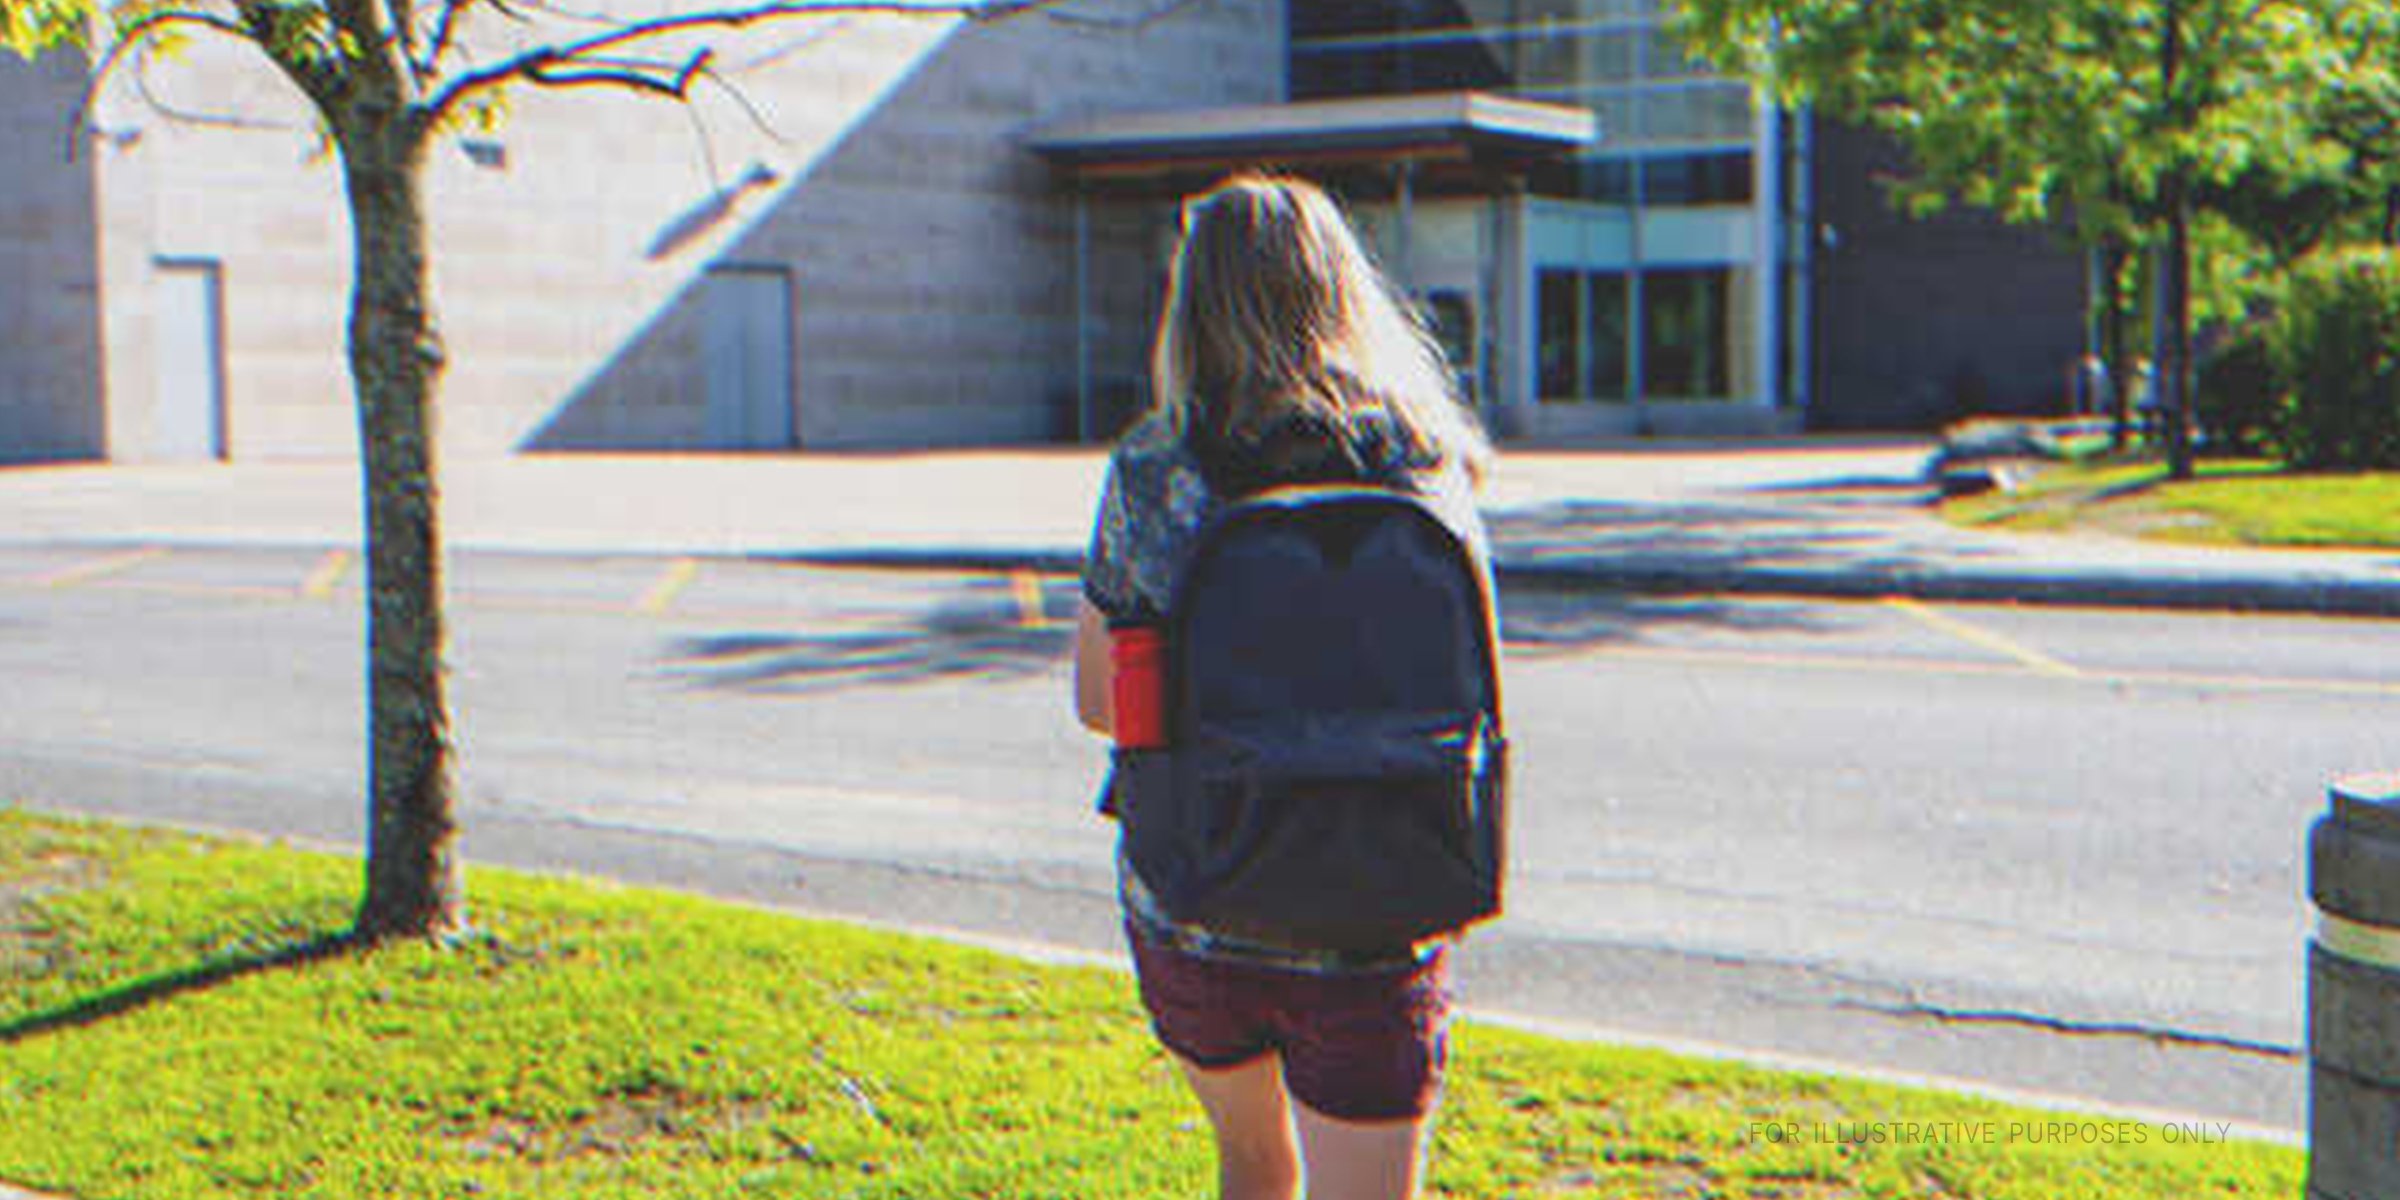 A teenage girl walking to school | Source: Shutterstock